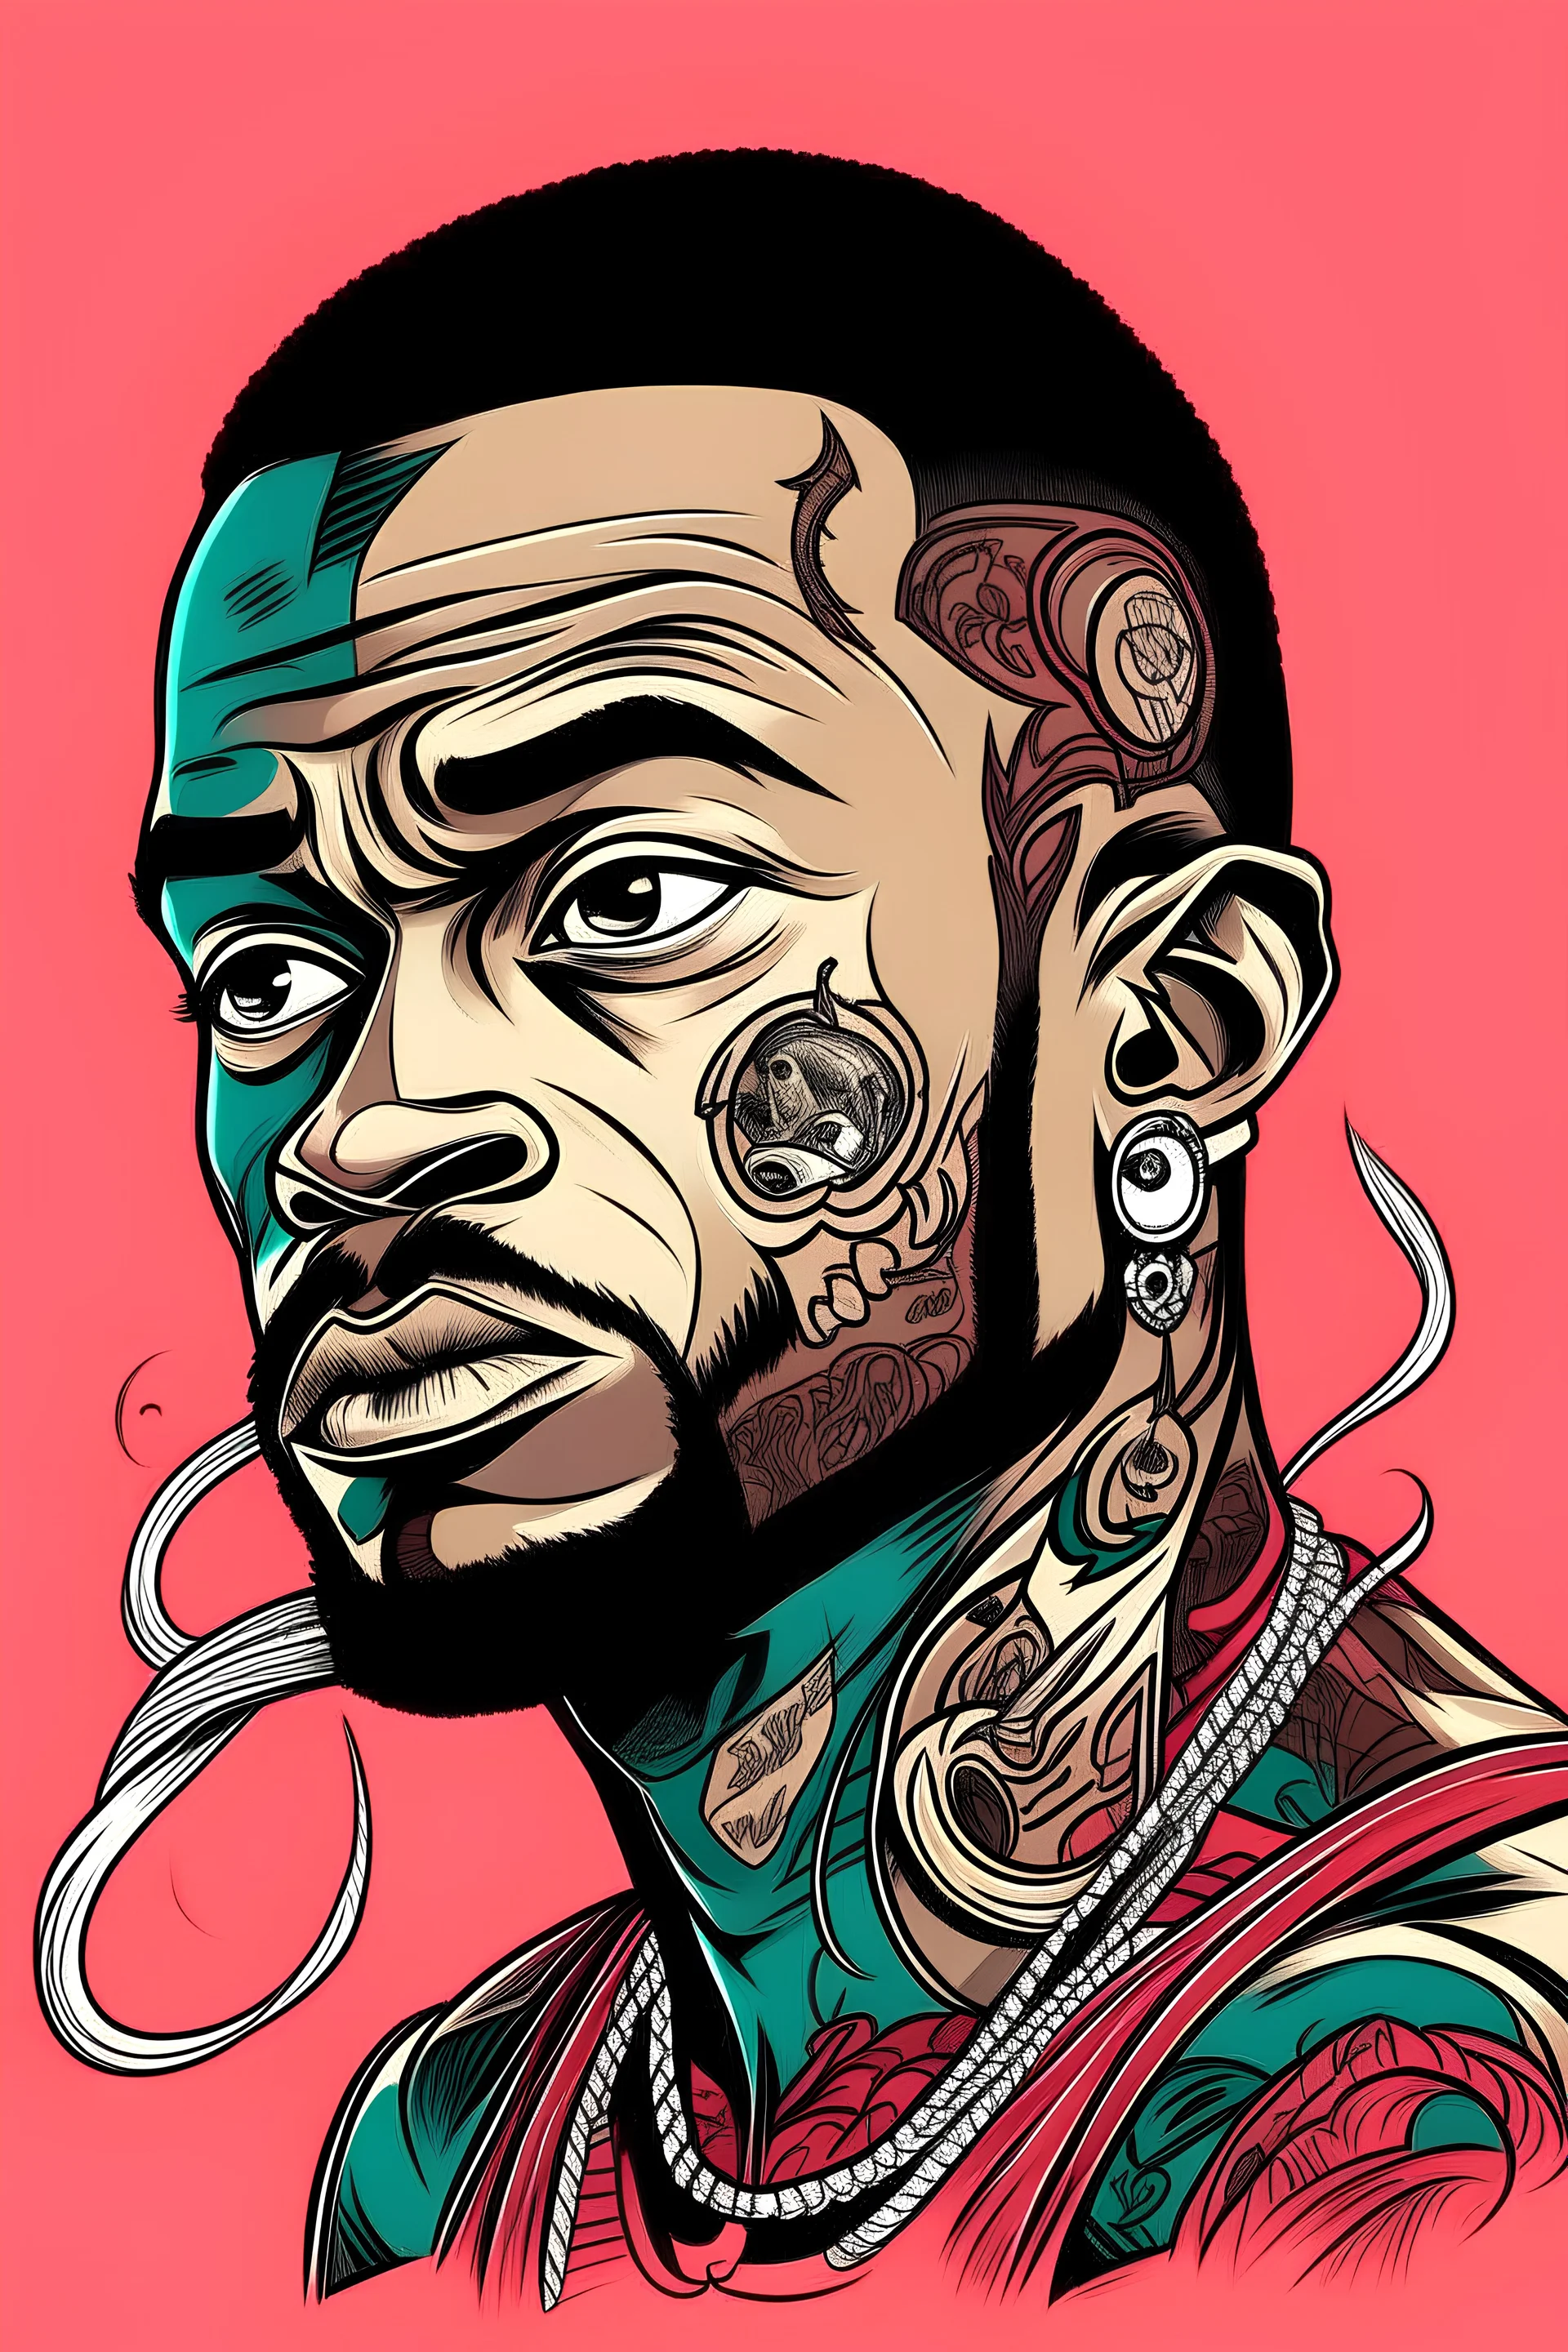 A drawing of a black man with tattoos cartoon pop art